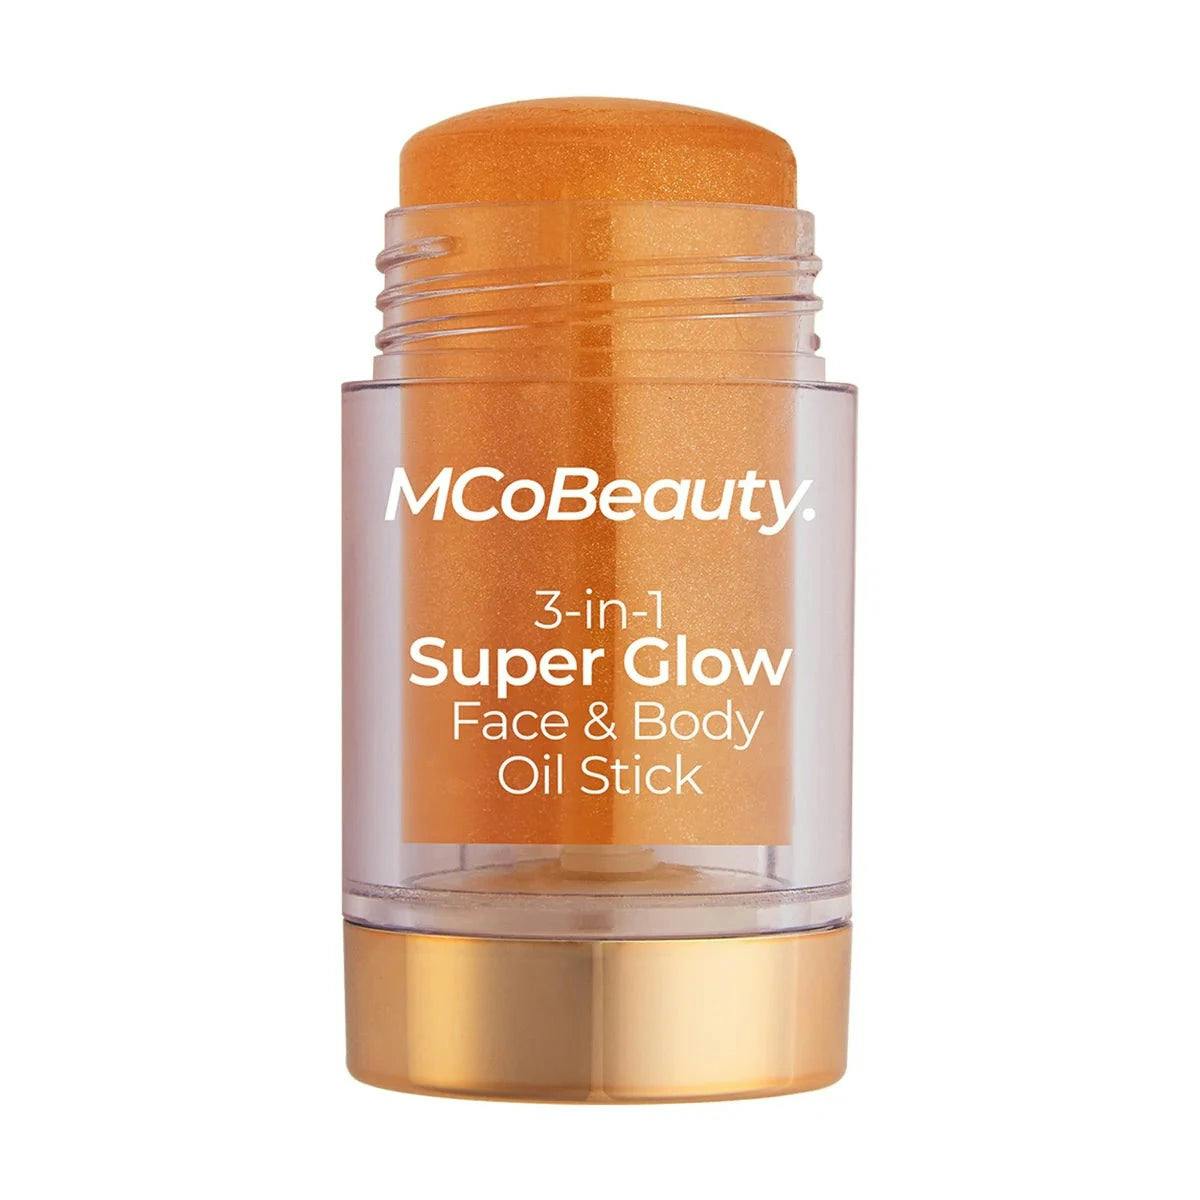 MCoBeauty 3-in-1 Super Glow Face & Body Oil Stick - Bronze